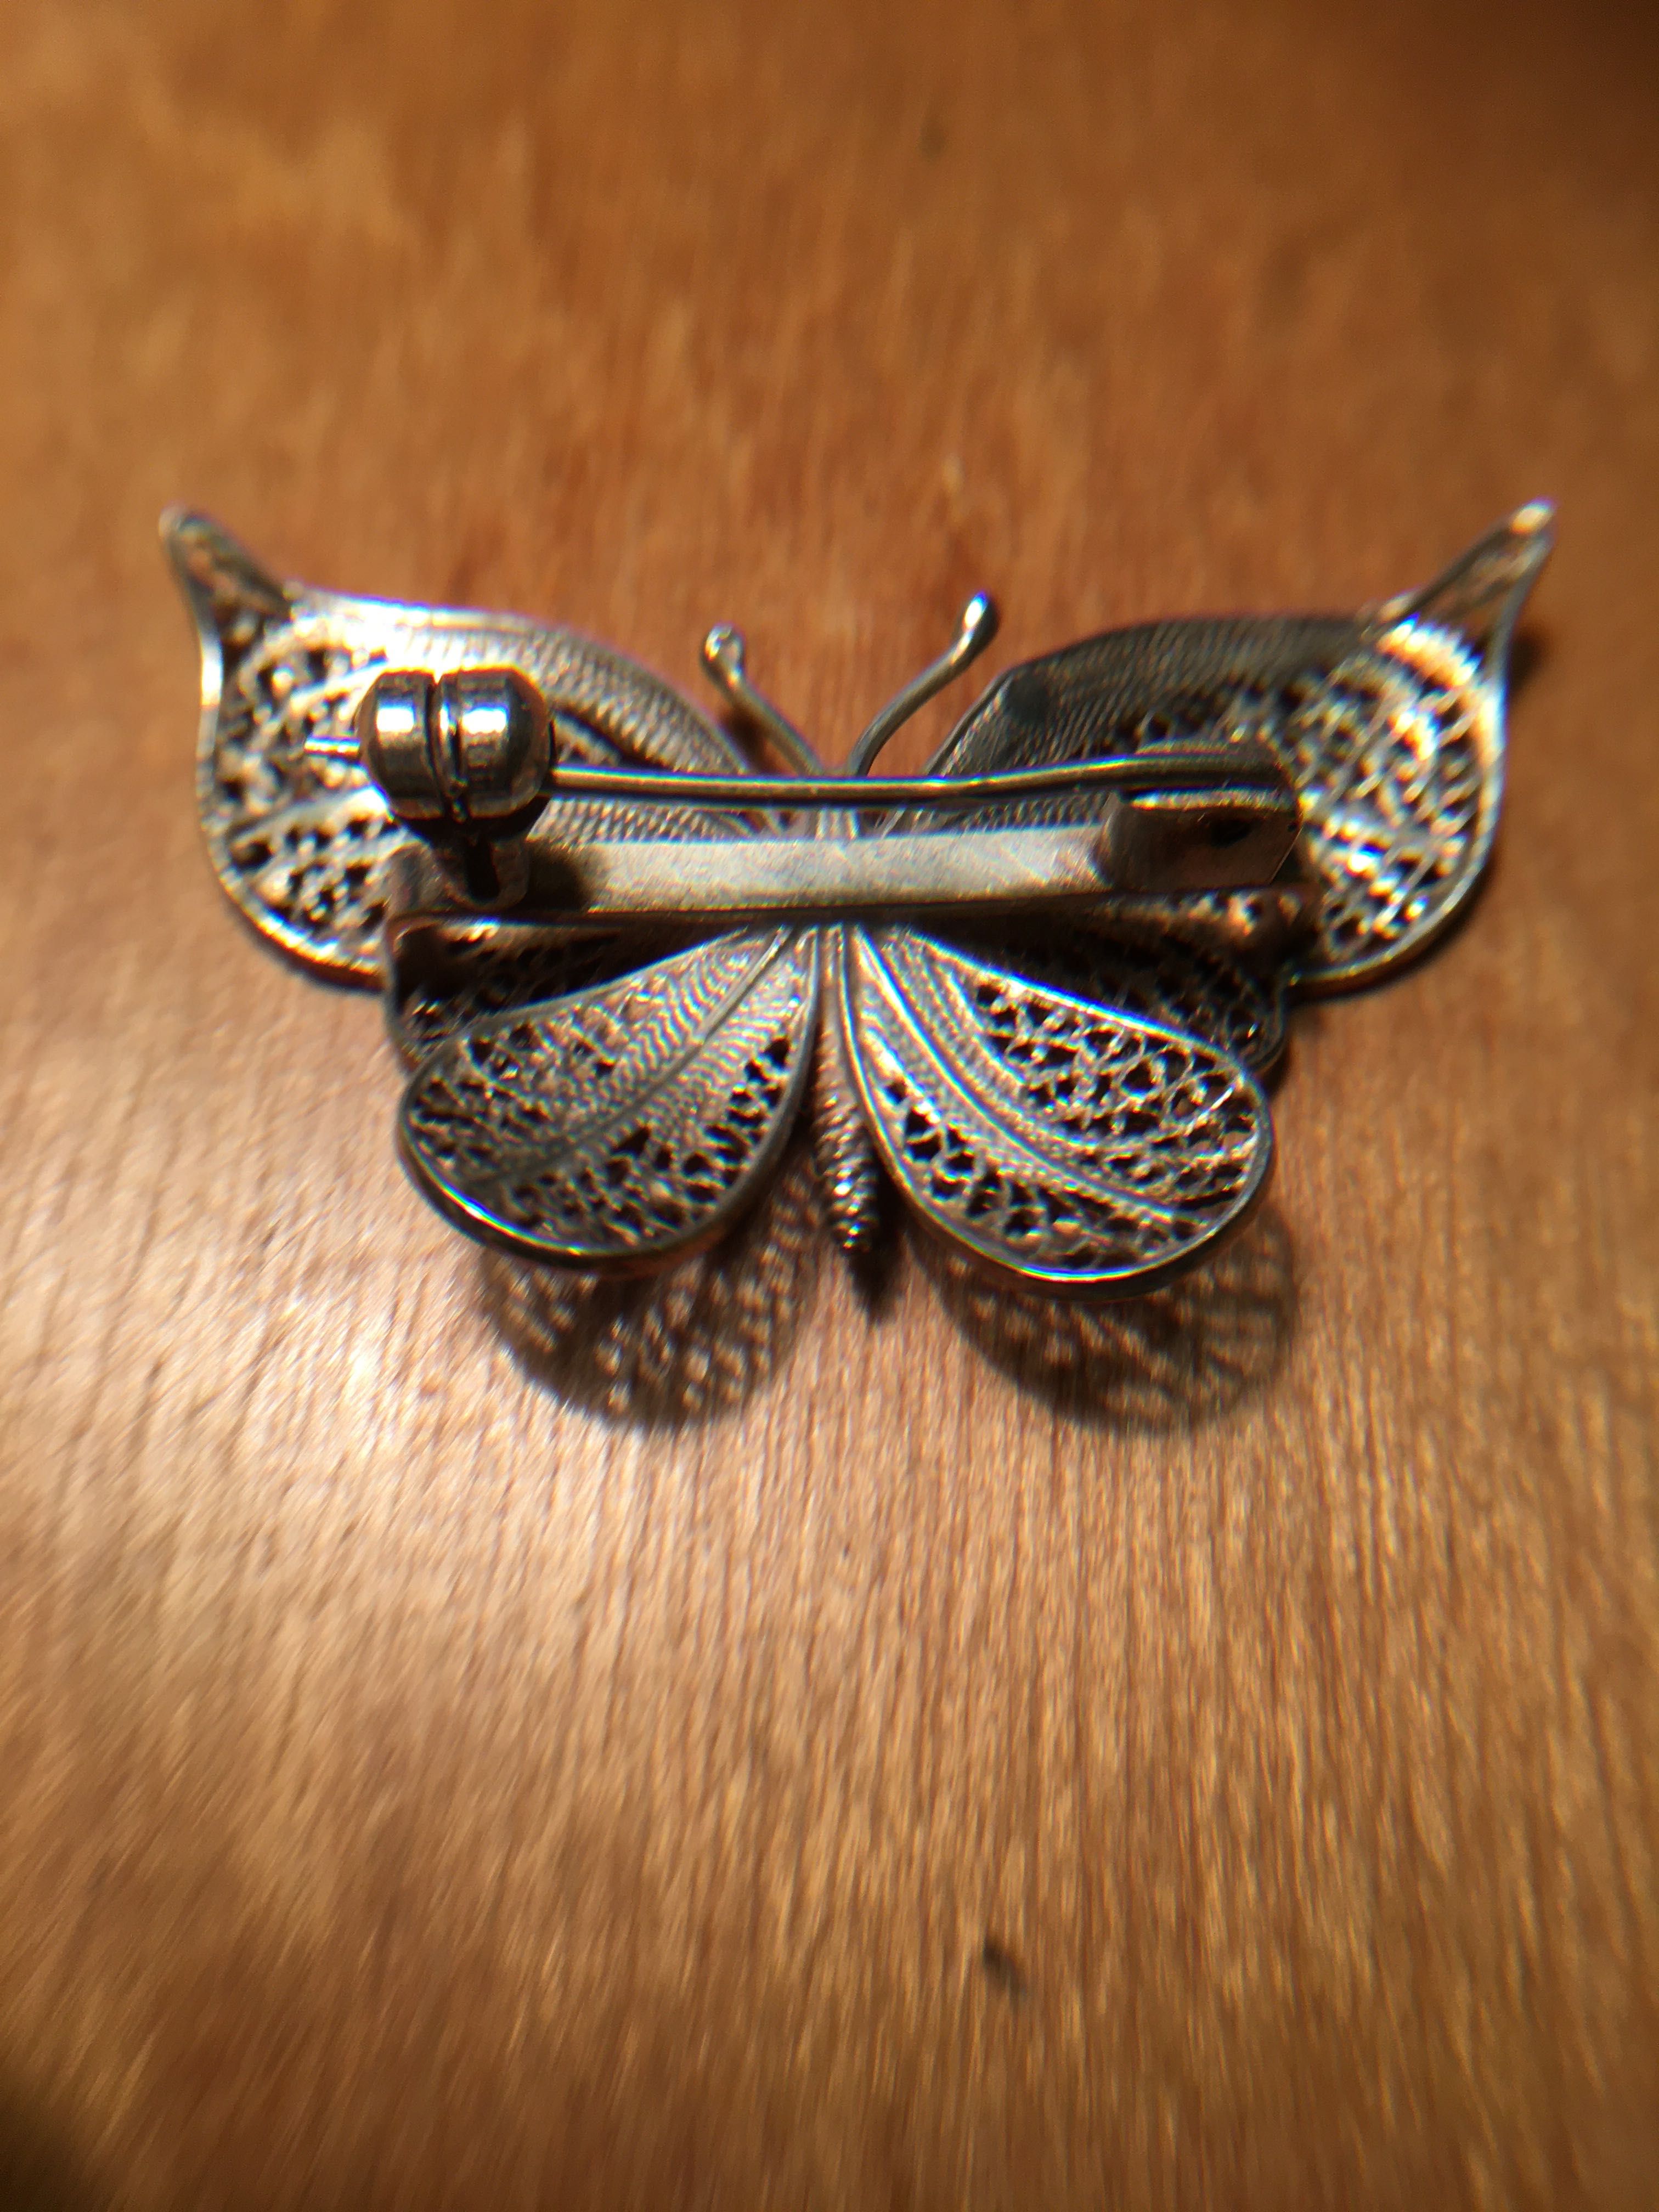 PRATA ÁGUIA 835 - borboleta em filigrana - 4 x 2,5 cm/s